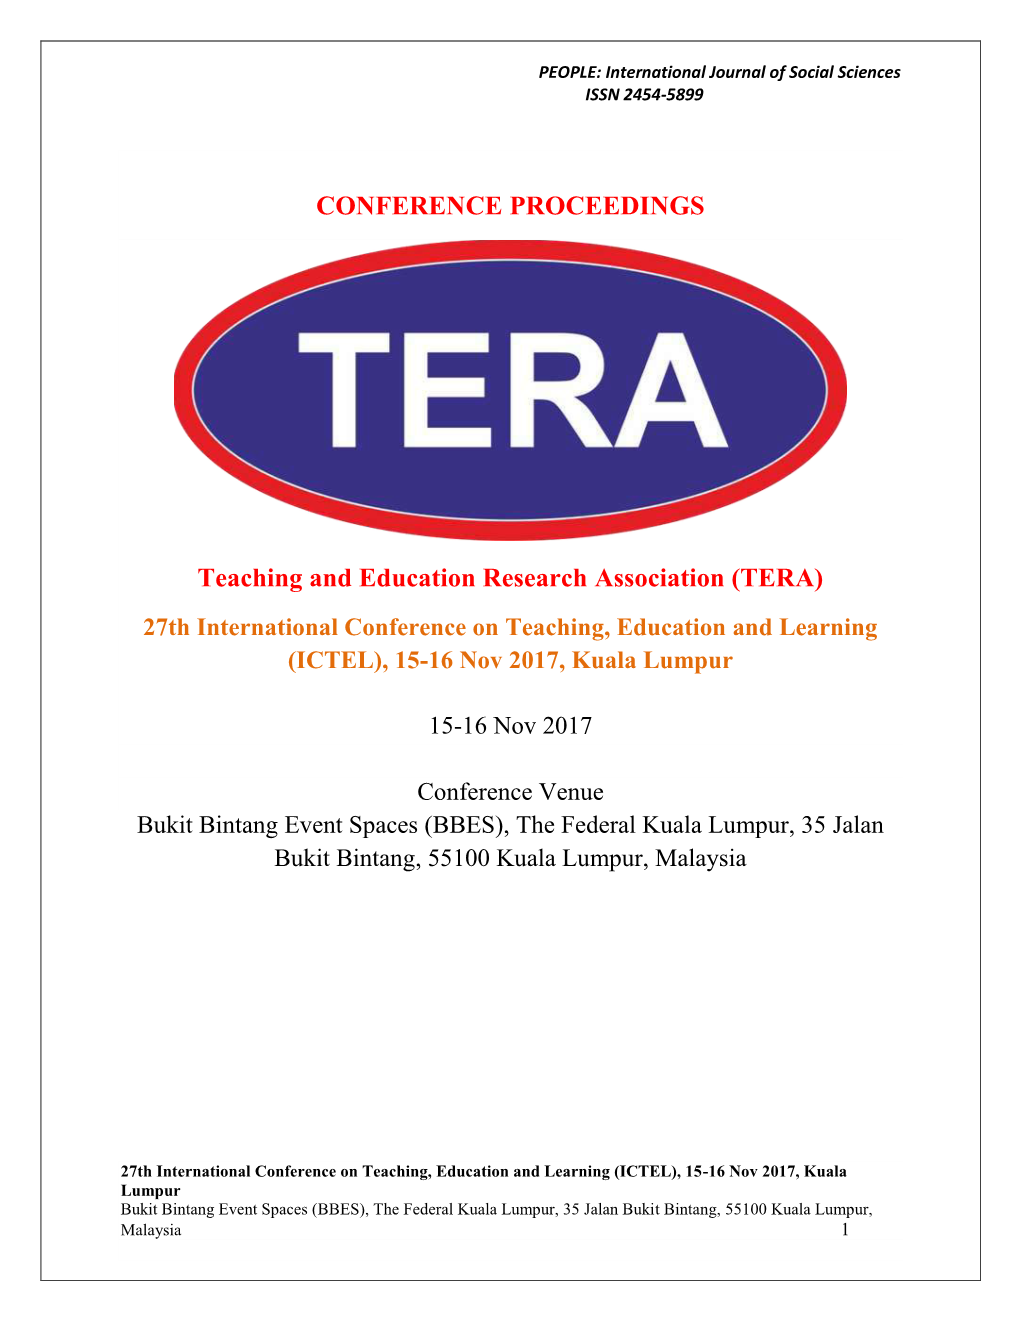 TERA International Conference, Kuala-Lumpur, November 2017